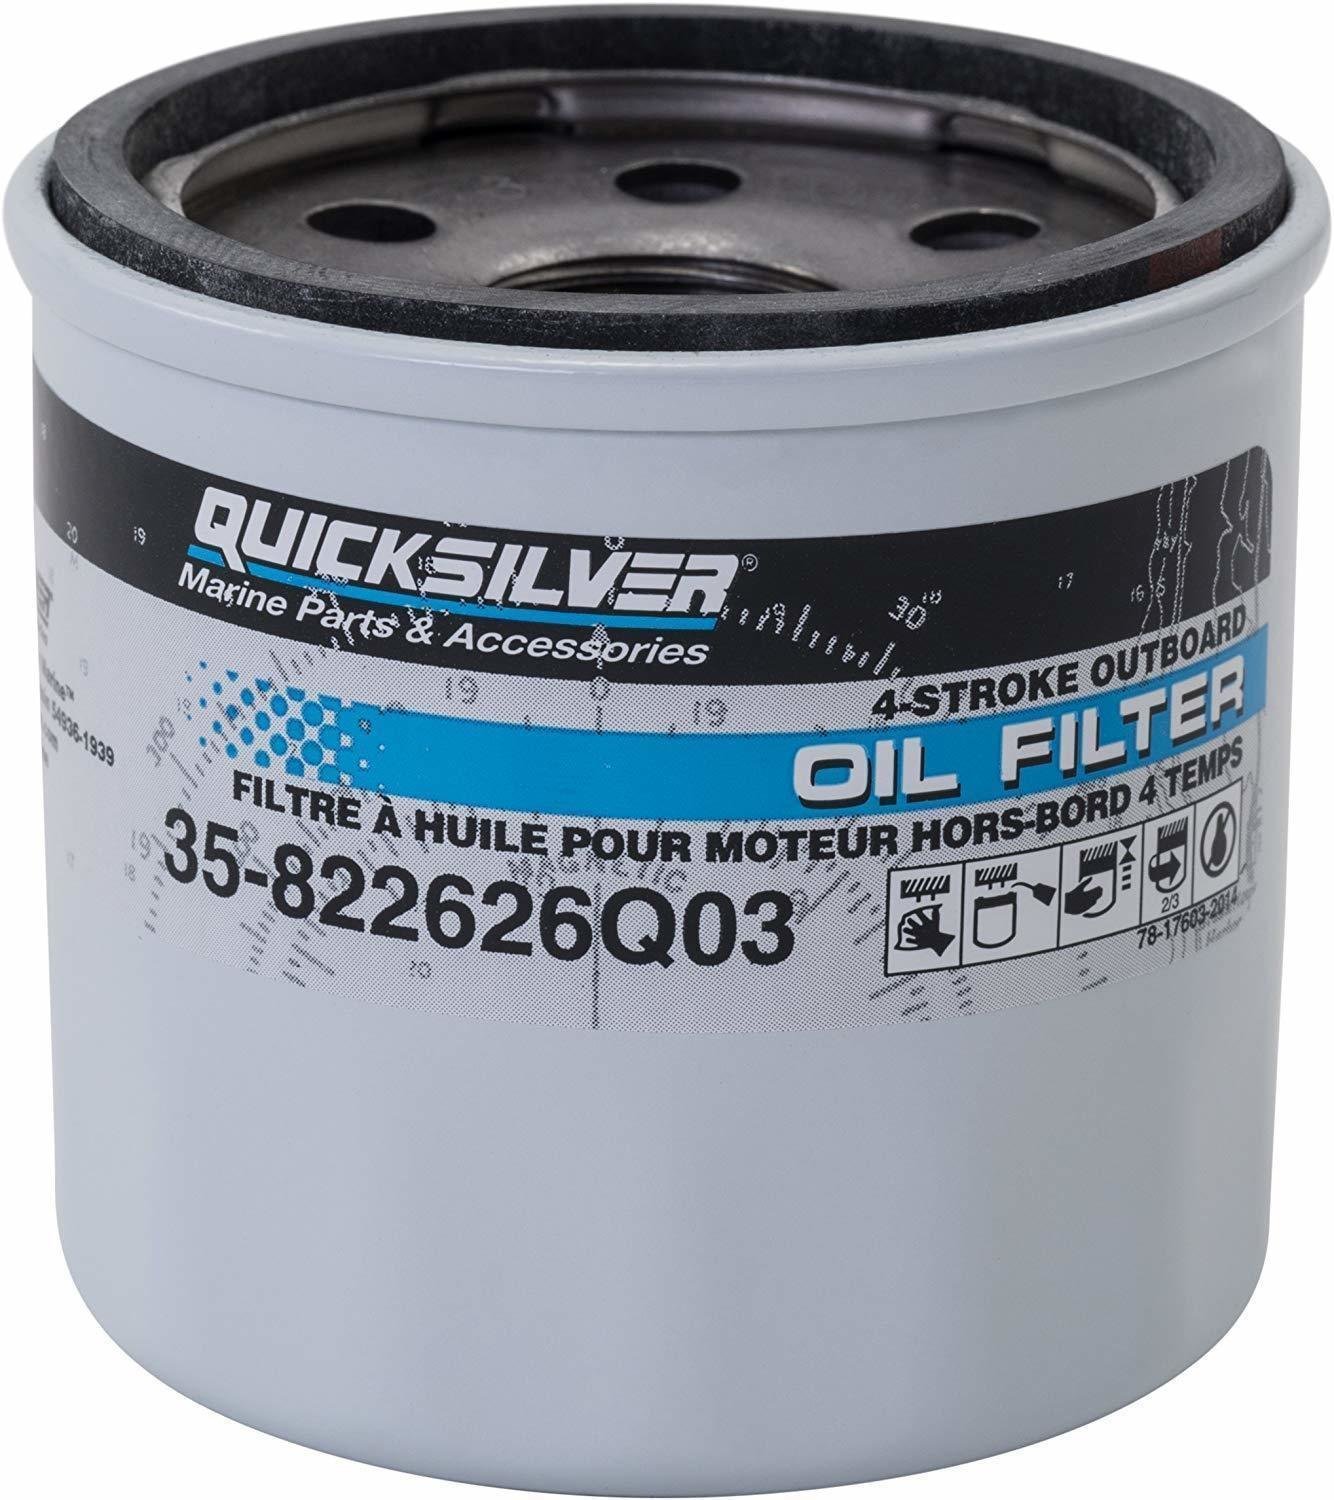 Boat Filters Quicksilver Oil Filter 35-8M0162832